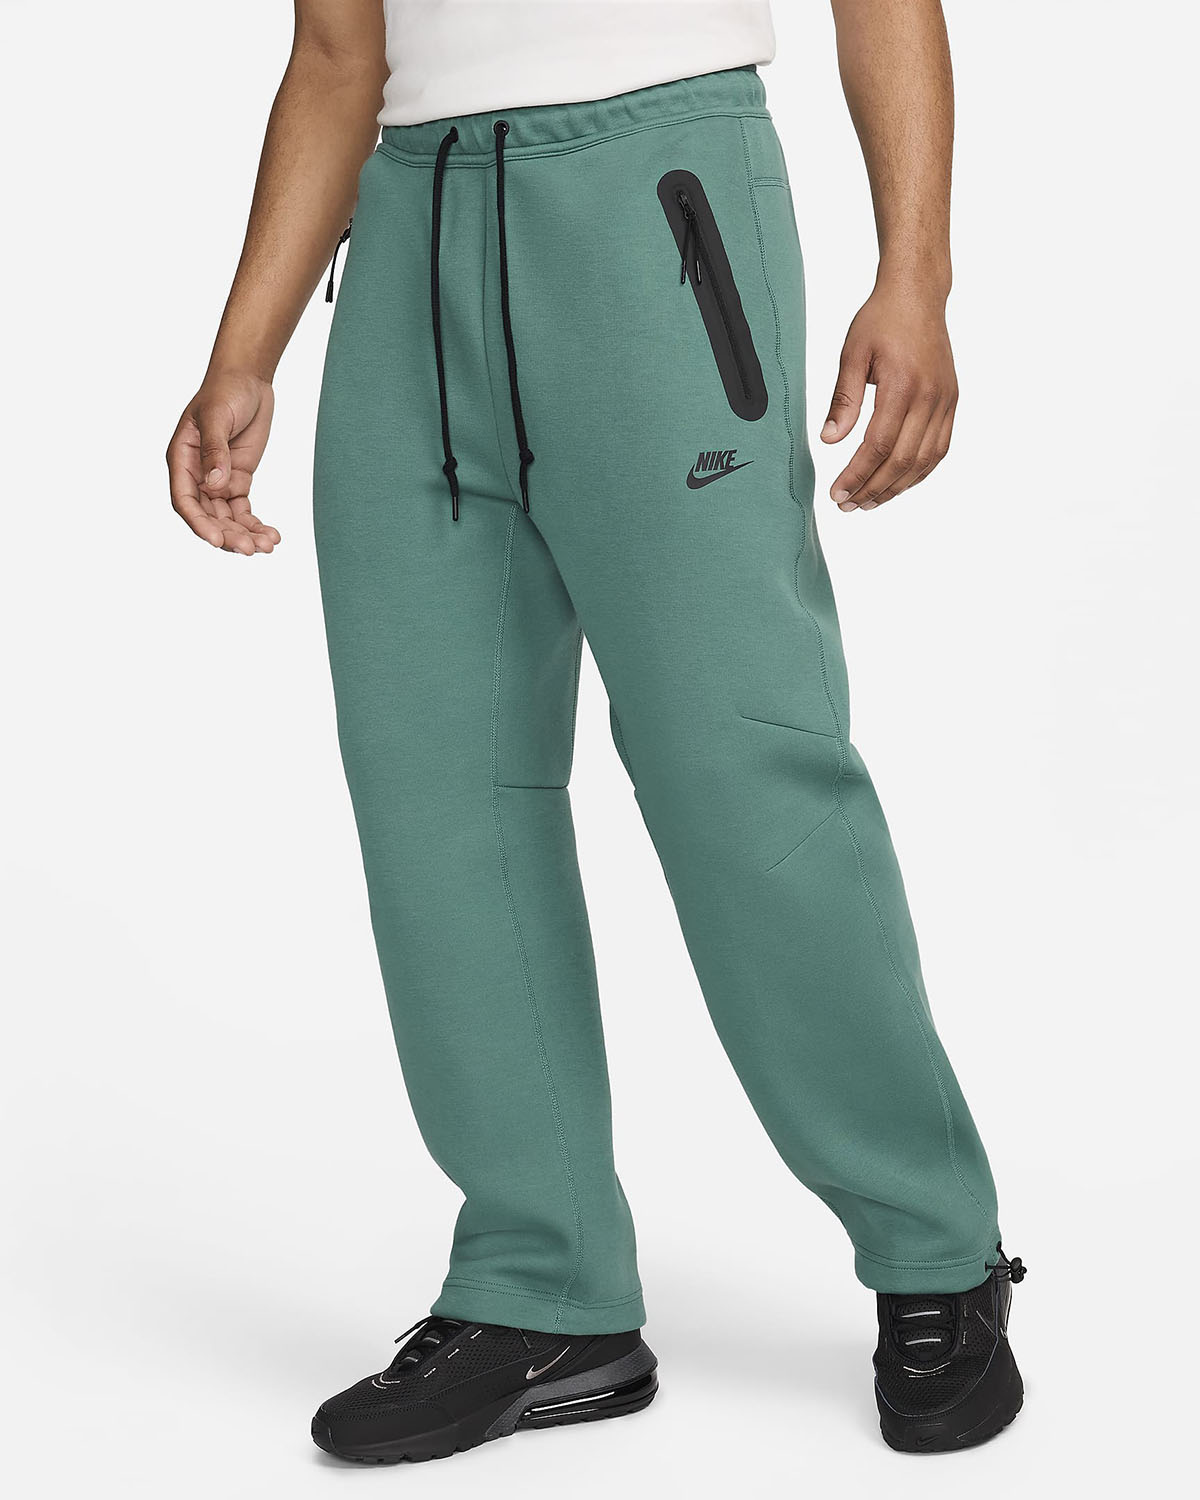 Nike Tech Fleece Open Hem Sweatpants Pants Bicoastal